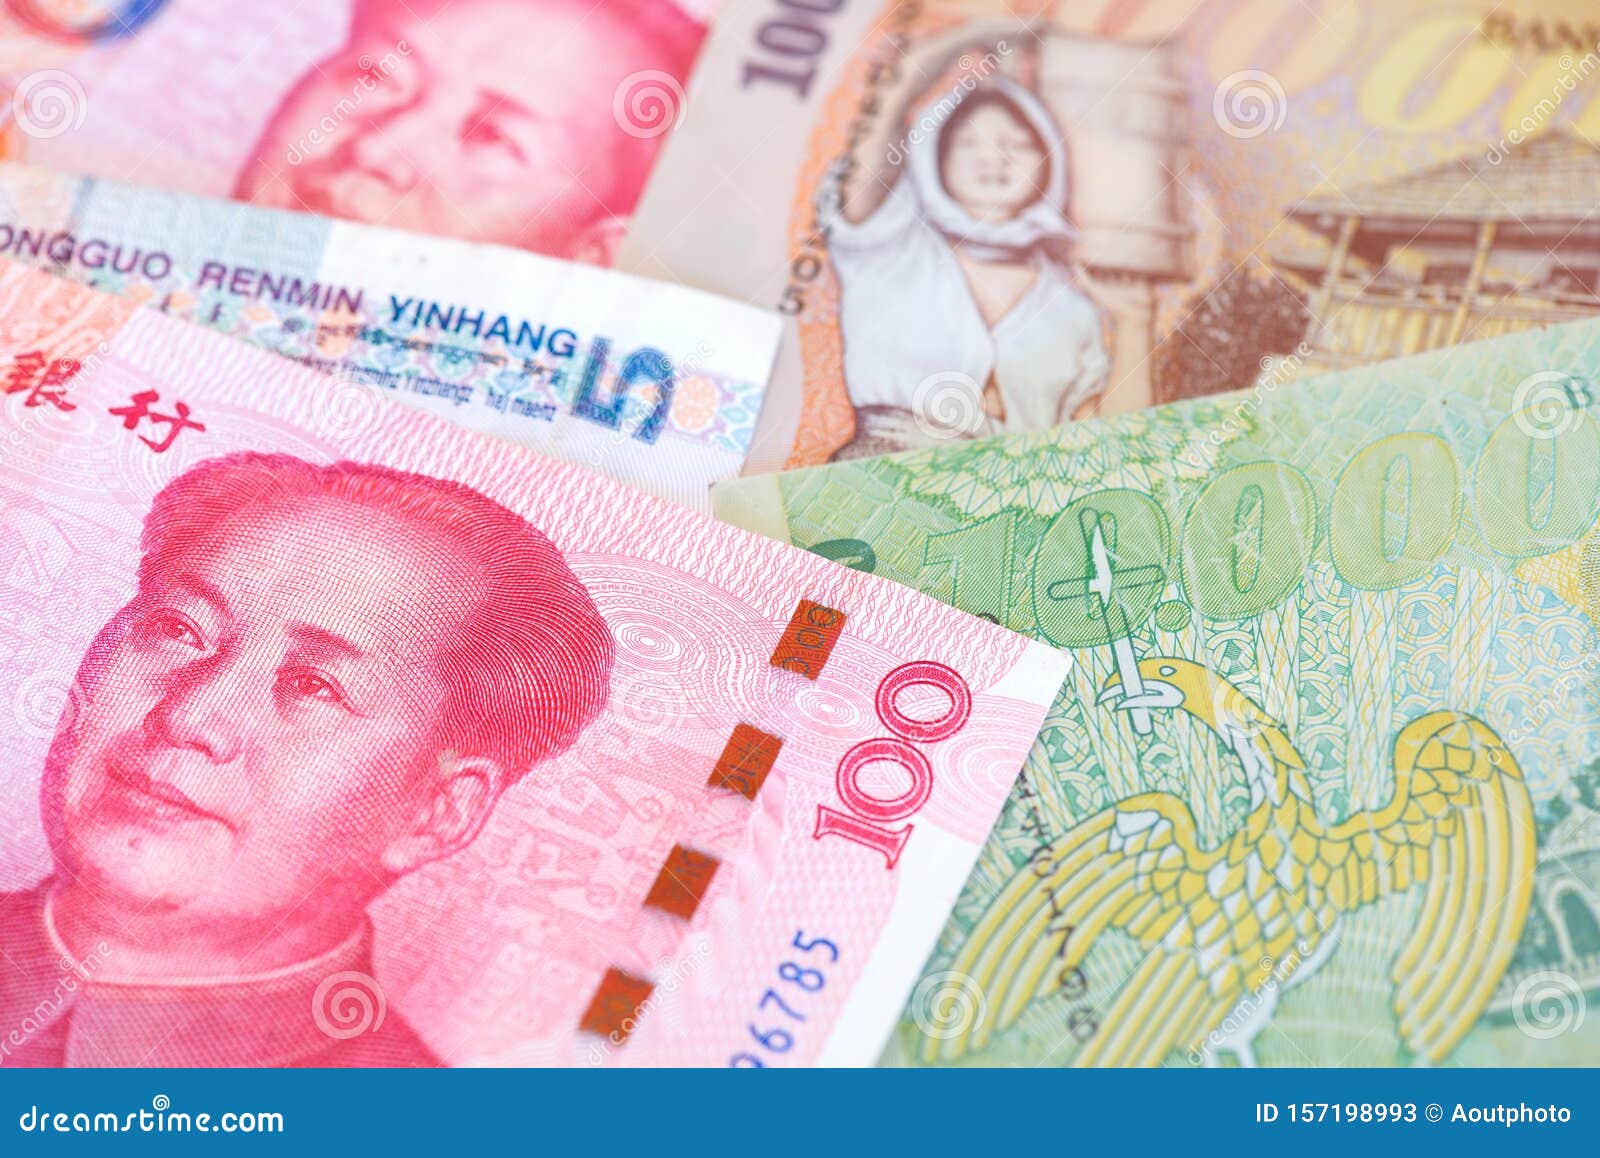 Rmb to rub. Renminbi валюта. Ron валюта. Валюта Румынии. Валюта румынский лей.